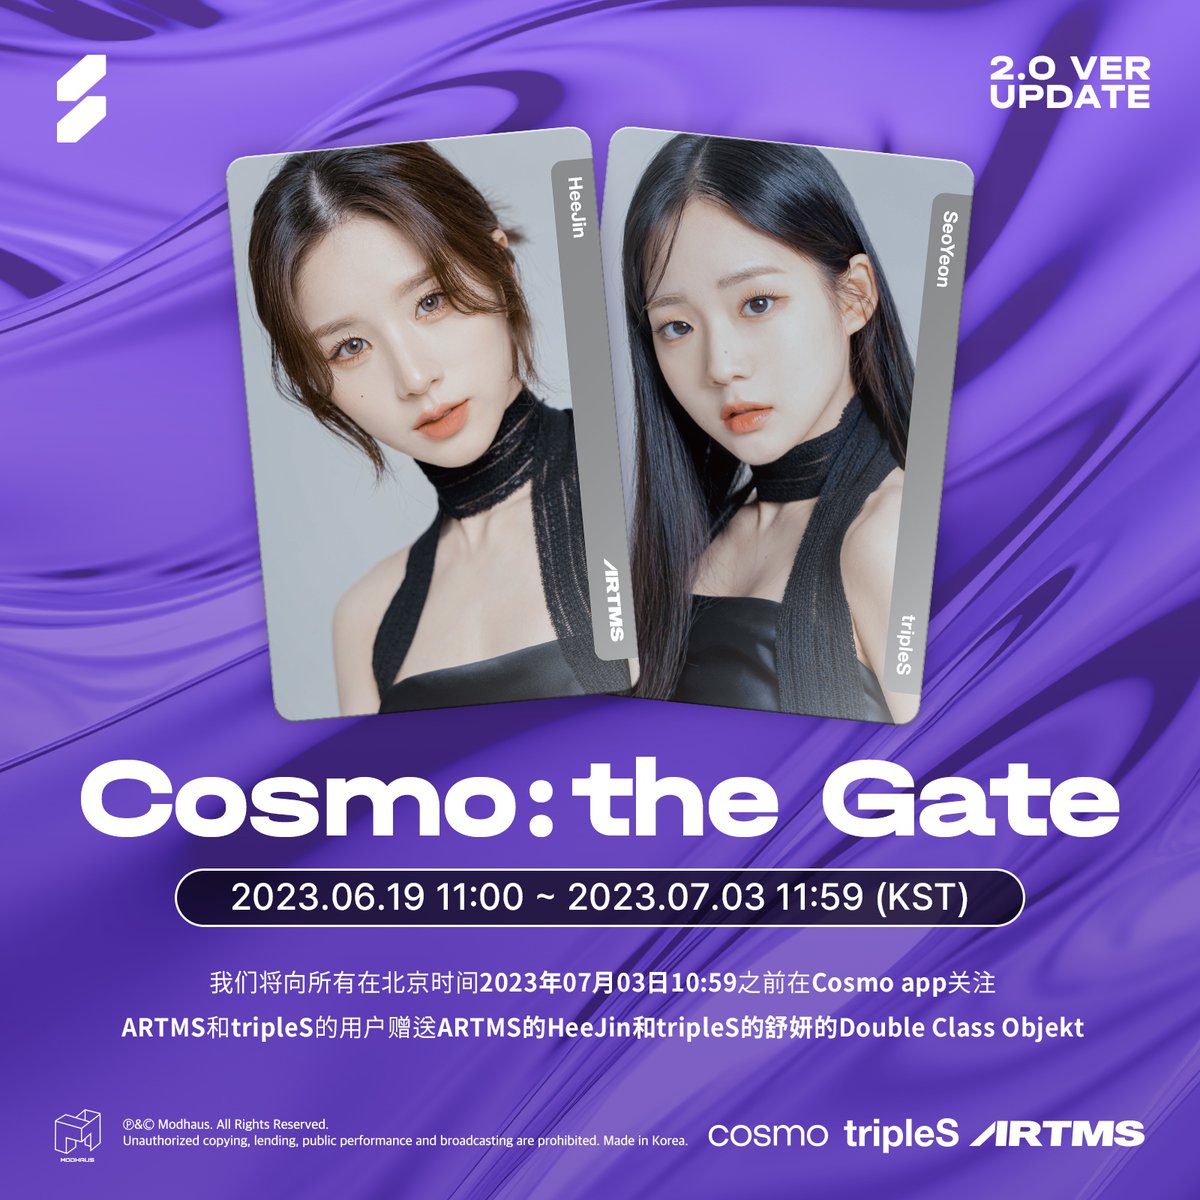 Cosmo : the Gate
2.0 Version Update

Follow Event : 
🗓️ 2023.06.19 11:00 AM KST ~ 2023.07.03 11:59 AM KST

#ARTMS #HeeJin #JinSoul #KimLip #Choerry